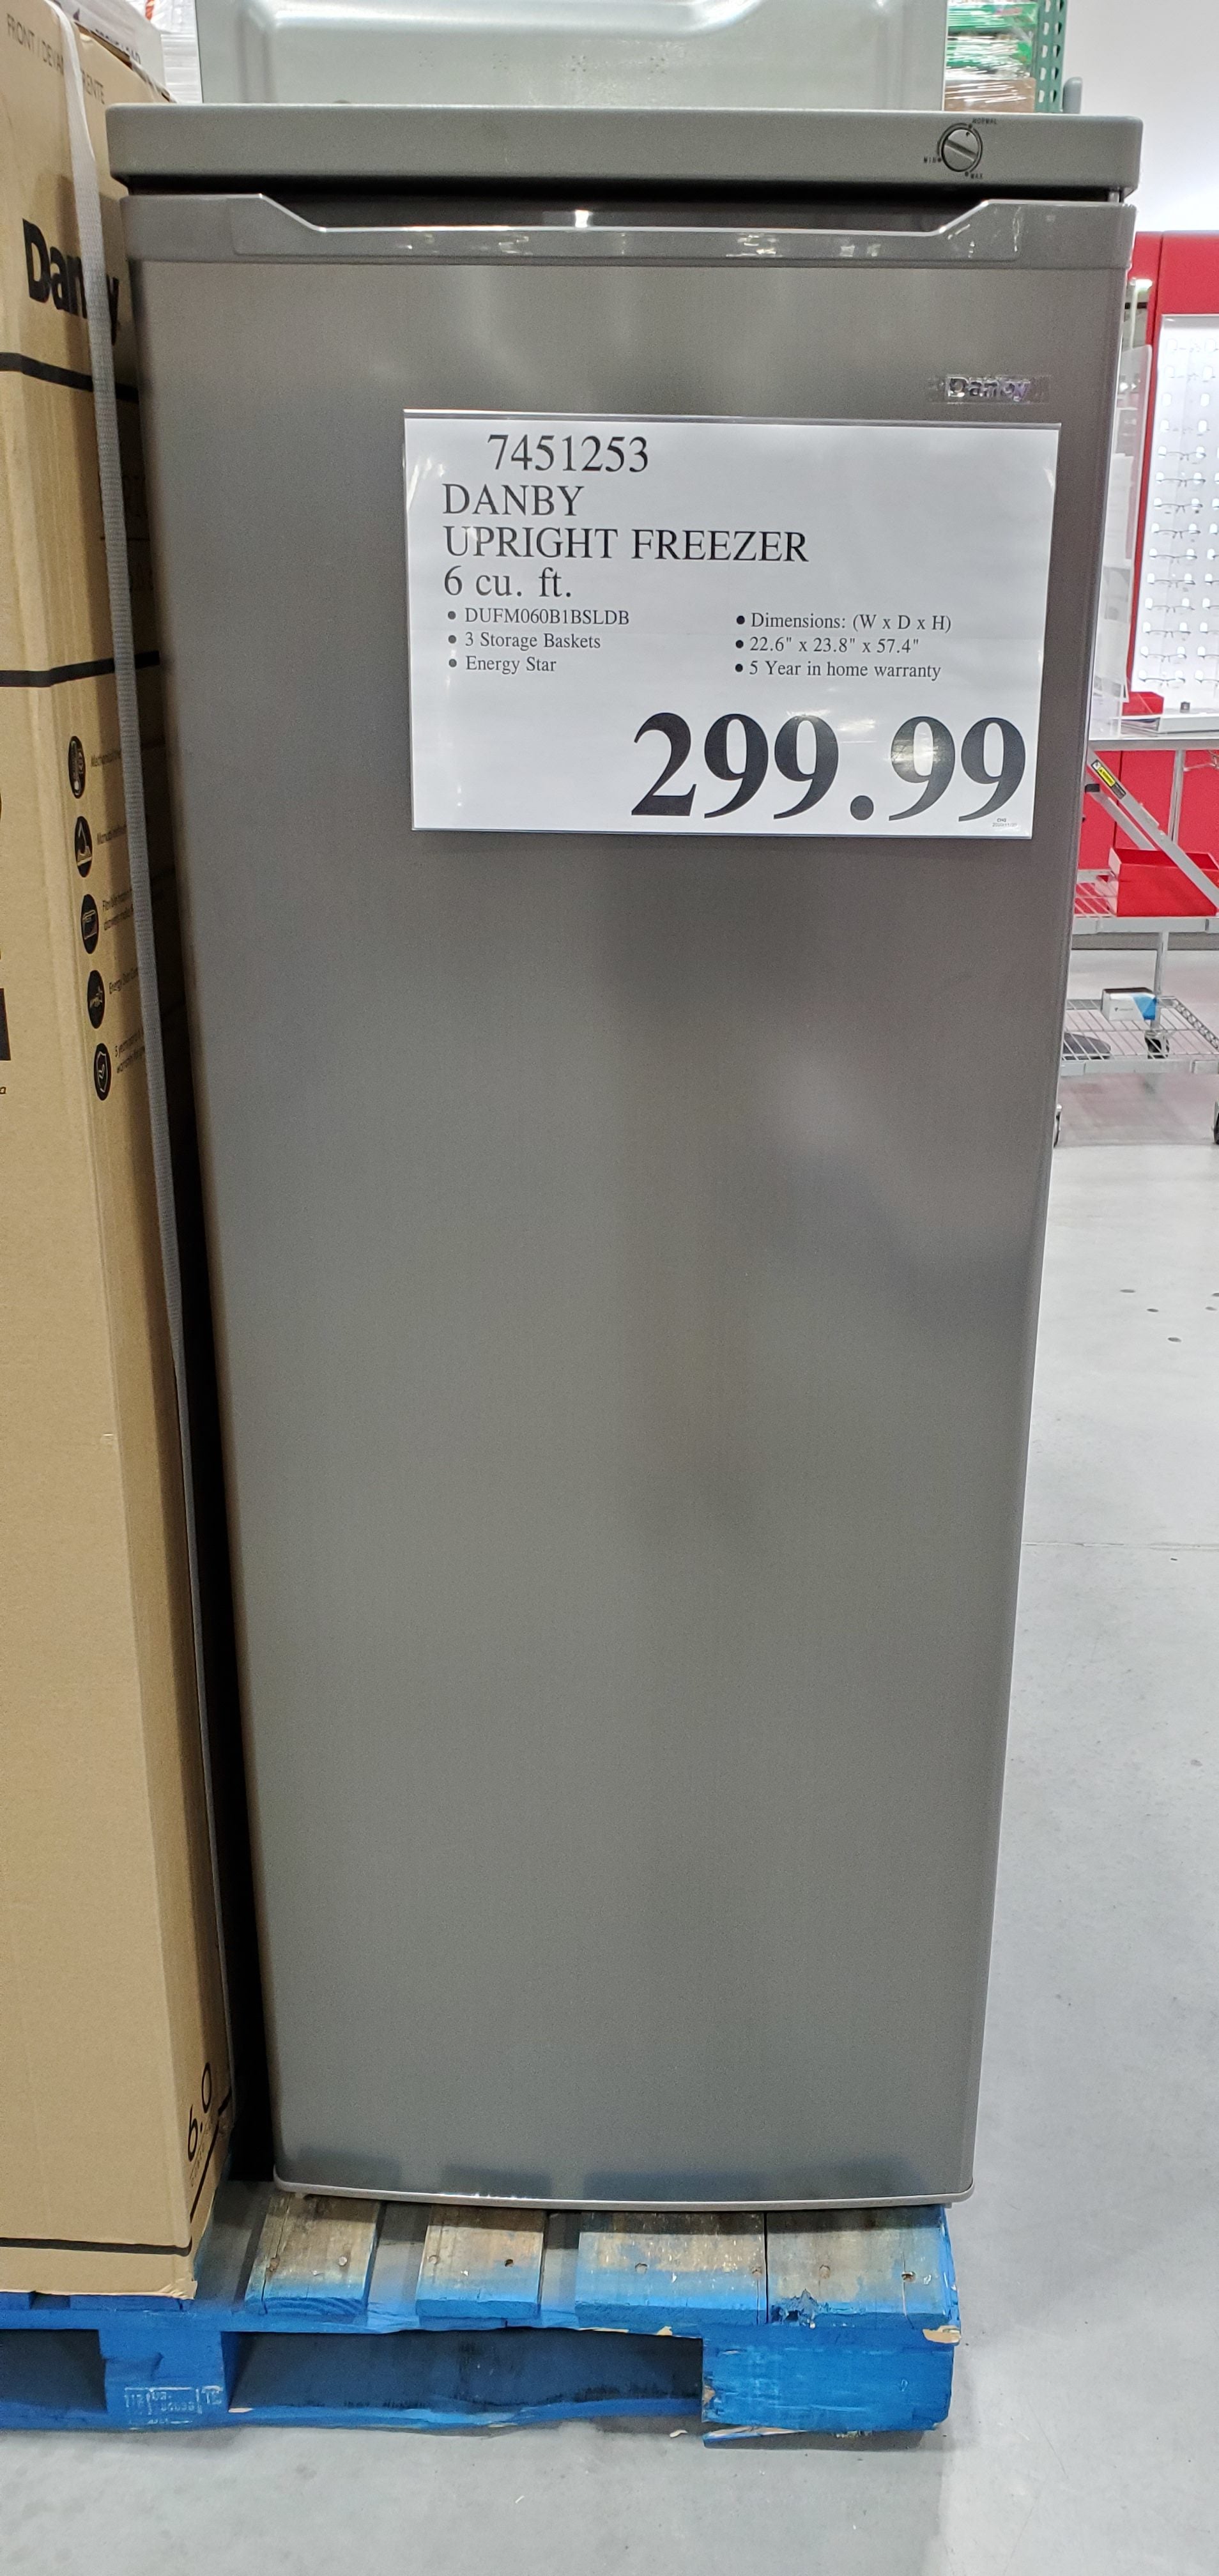 [Costco] Danby Upright Freezer 6 cu ft $299.99 in store - RedFlagDeals